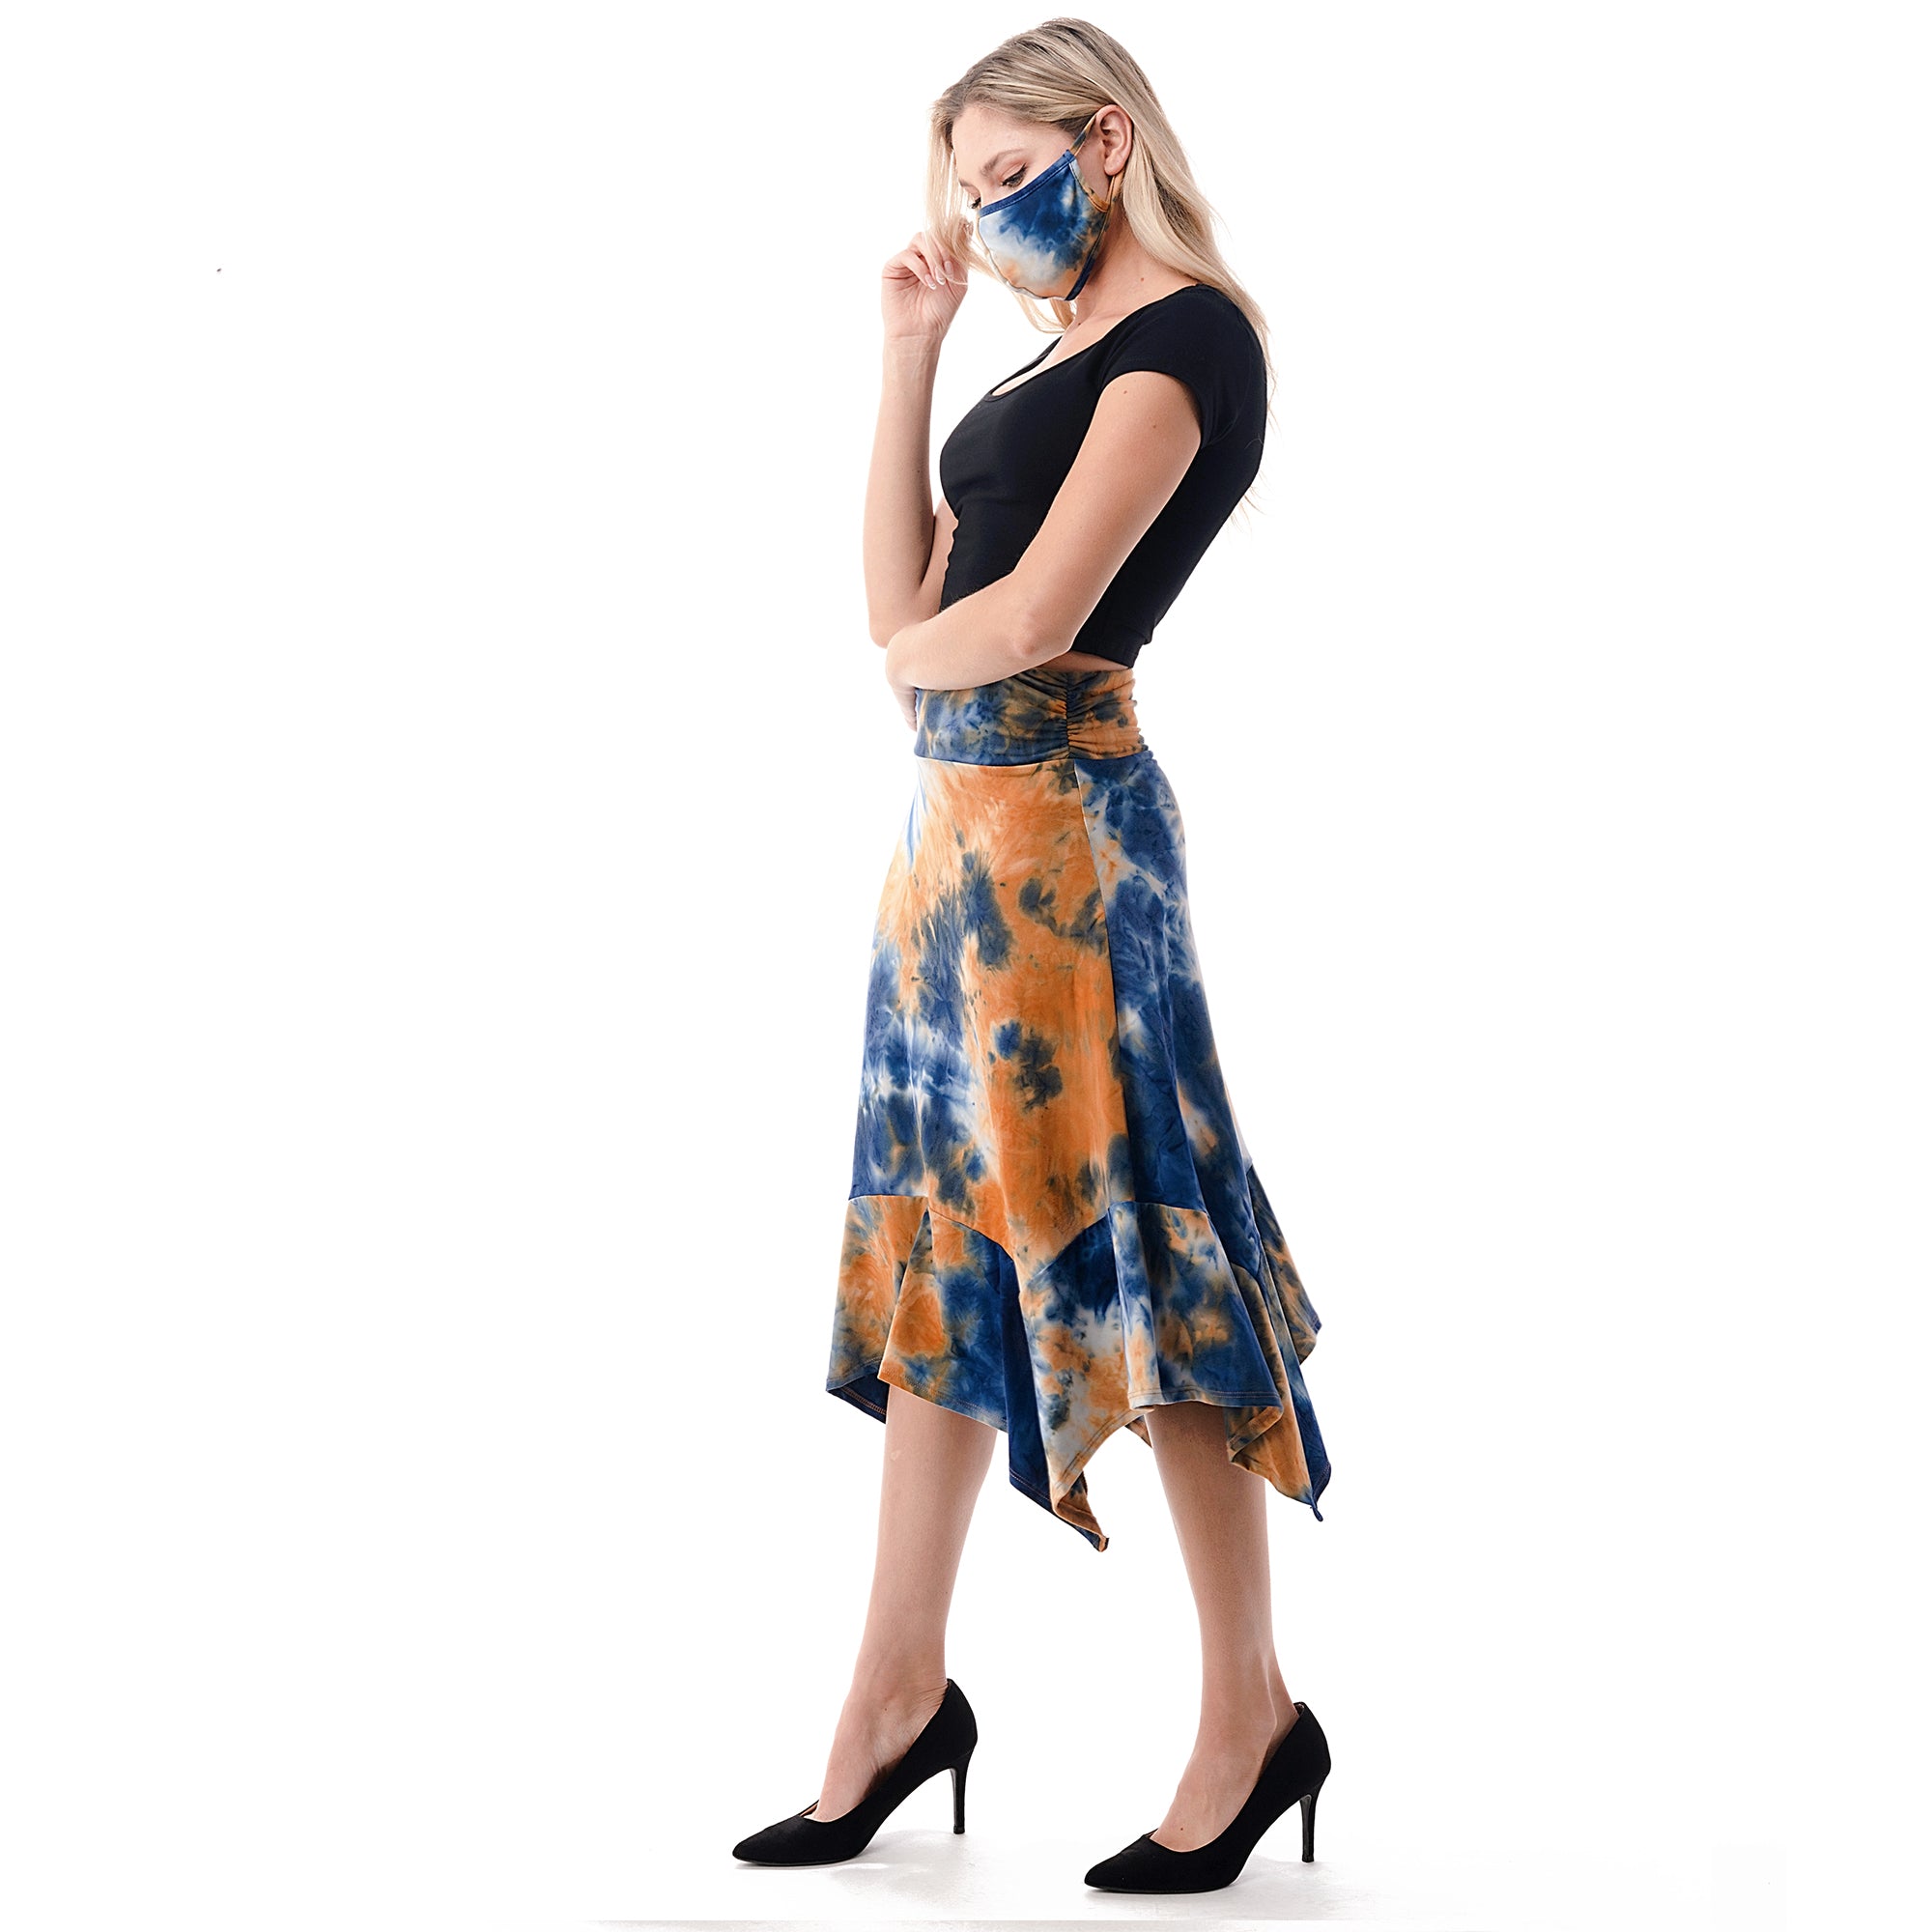 Fashionazzle Women's Flowy Handkerchief Hemline Midi Skirt Tie dye Print